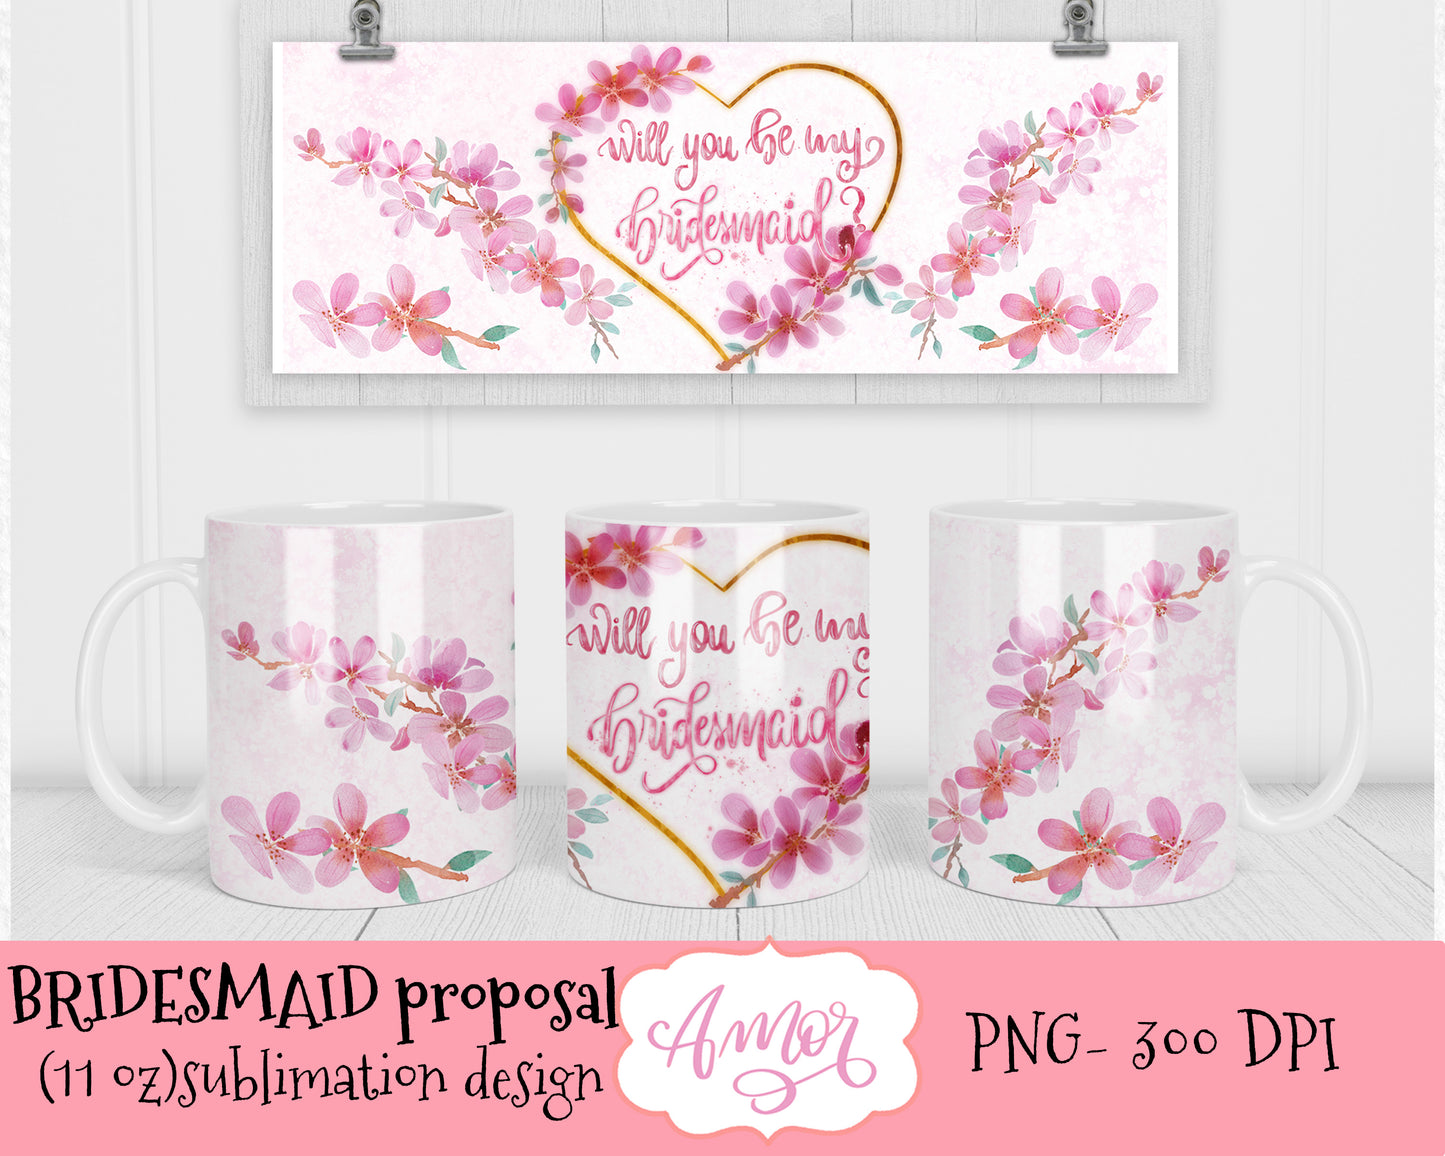 Bridesmaid Proposal for 11oz mug sublimation design